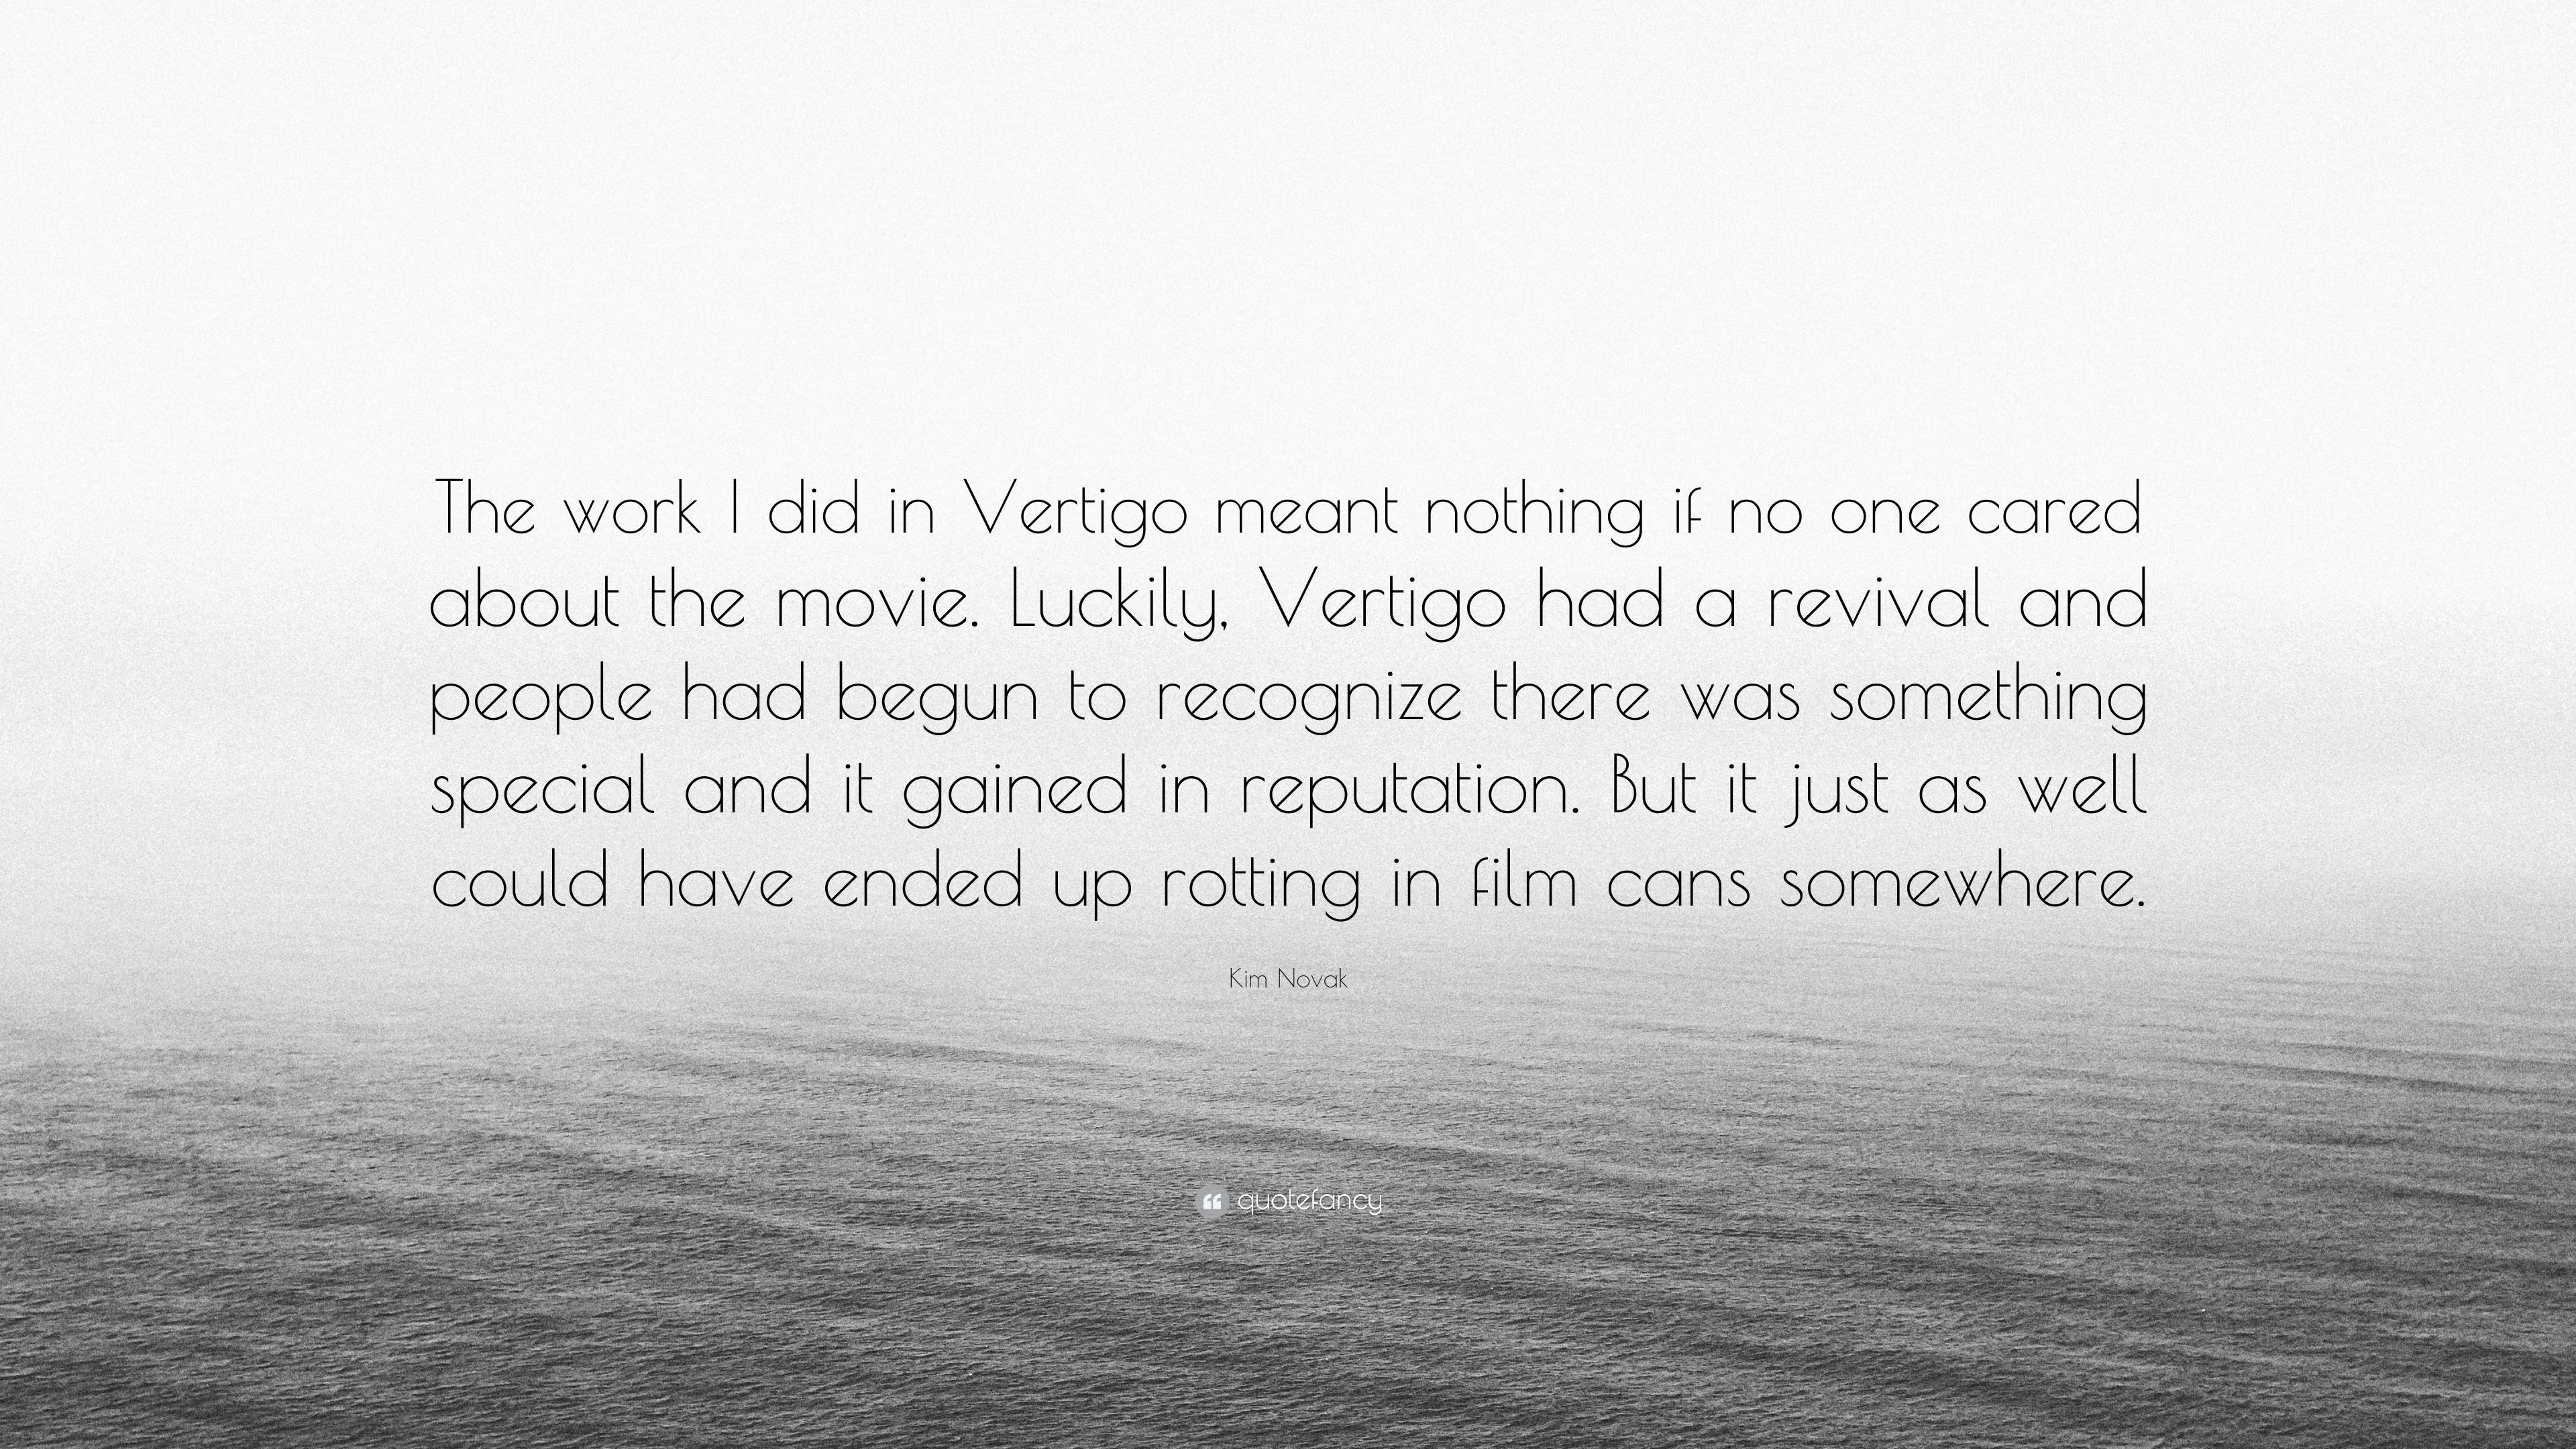 Kim Novak Quote: “The work I did in Vertigo meant nothing if no one